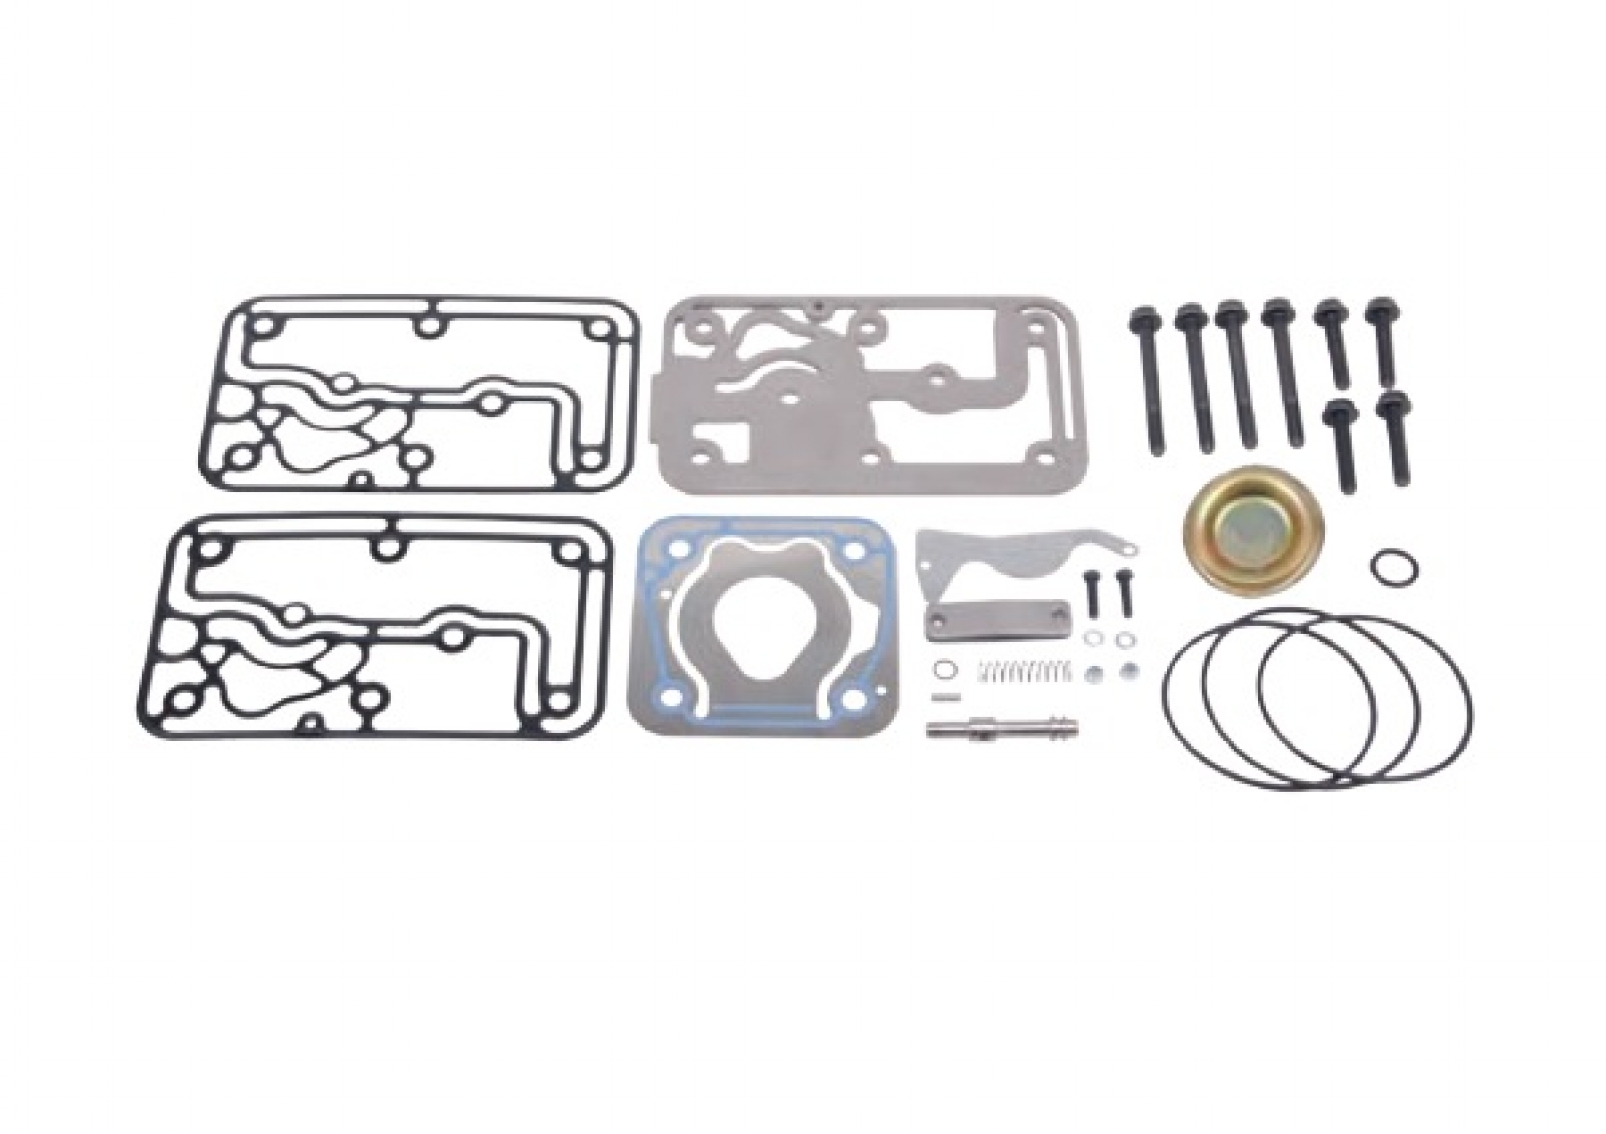 Air Compressor Repair Kit for Mercedes Benz, 4123529232, 0011301015